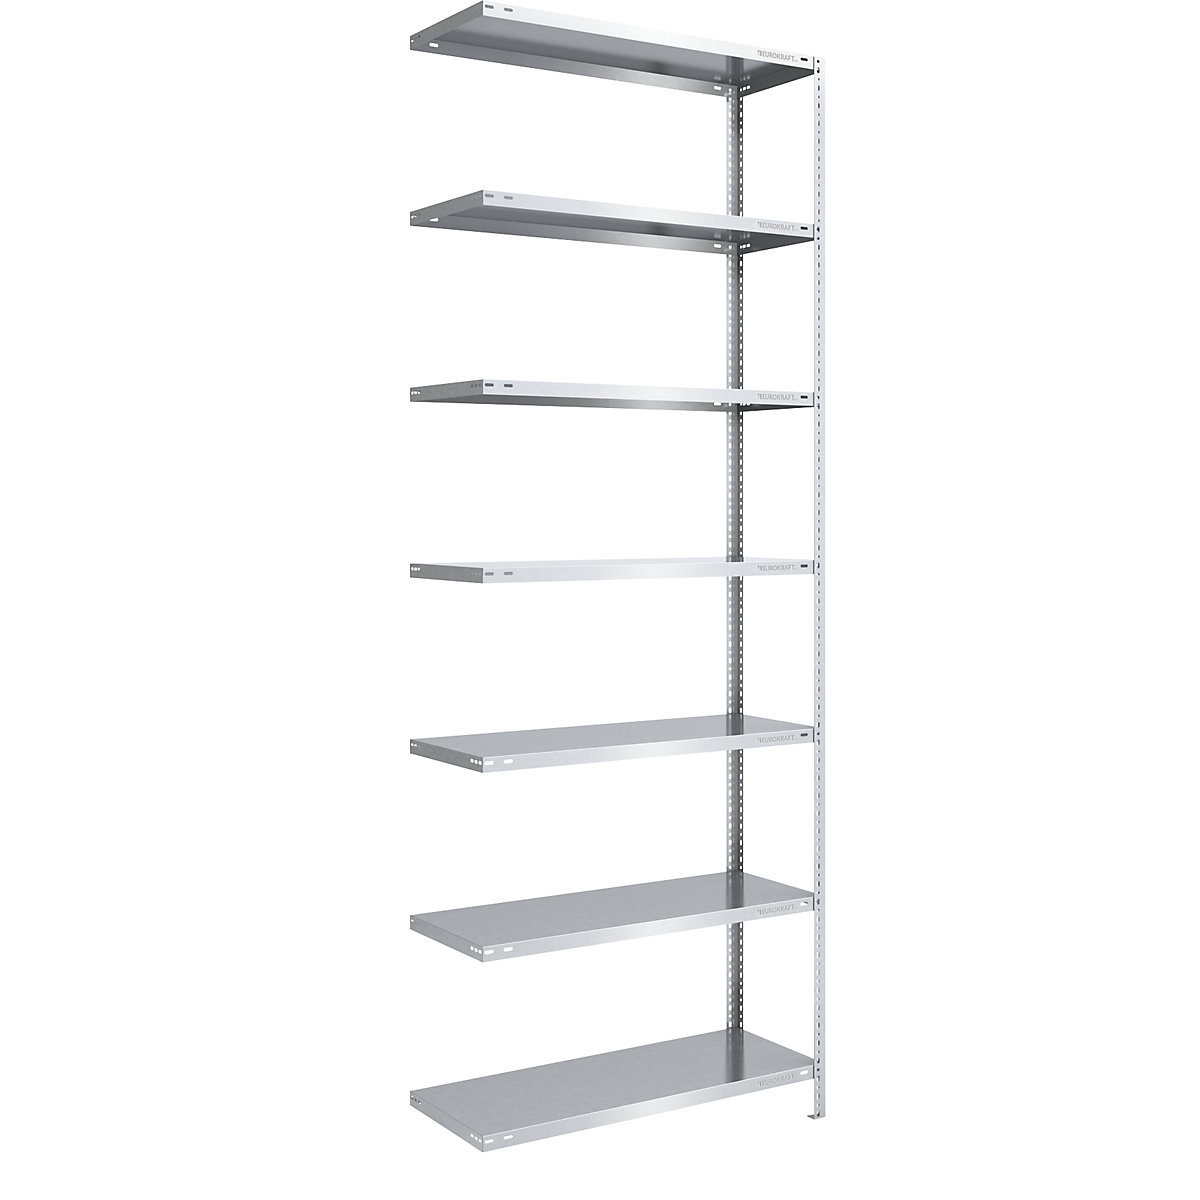 Bolt-together storage shelving, zinc plated, medium duty – eurokraft pro, shelf unit height 3000 mm, shelf width 1000 mm, depth 500 mm, extension shelf unit-5